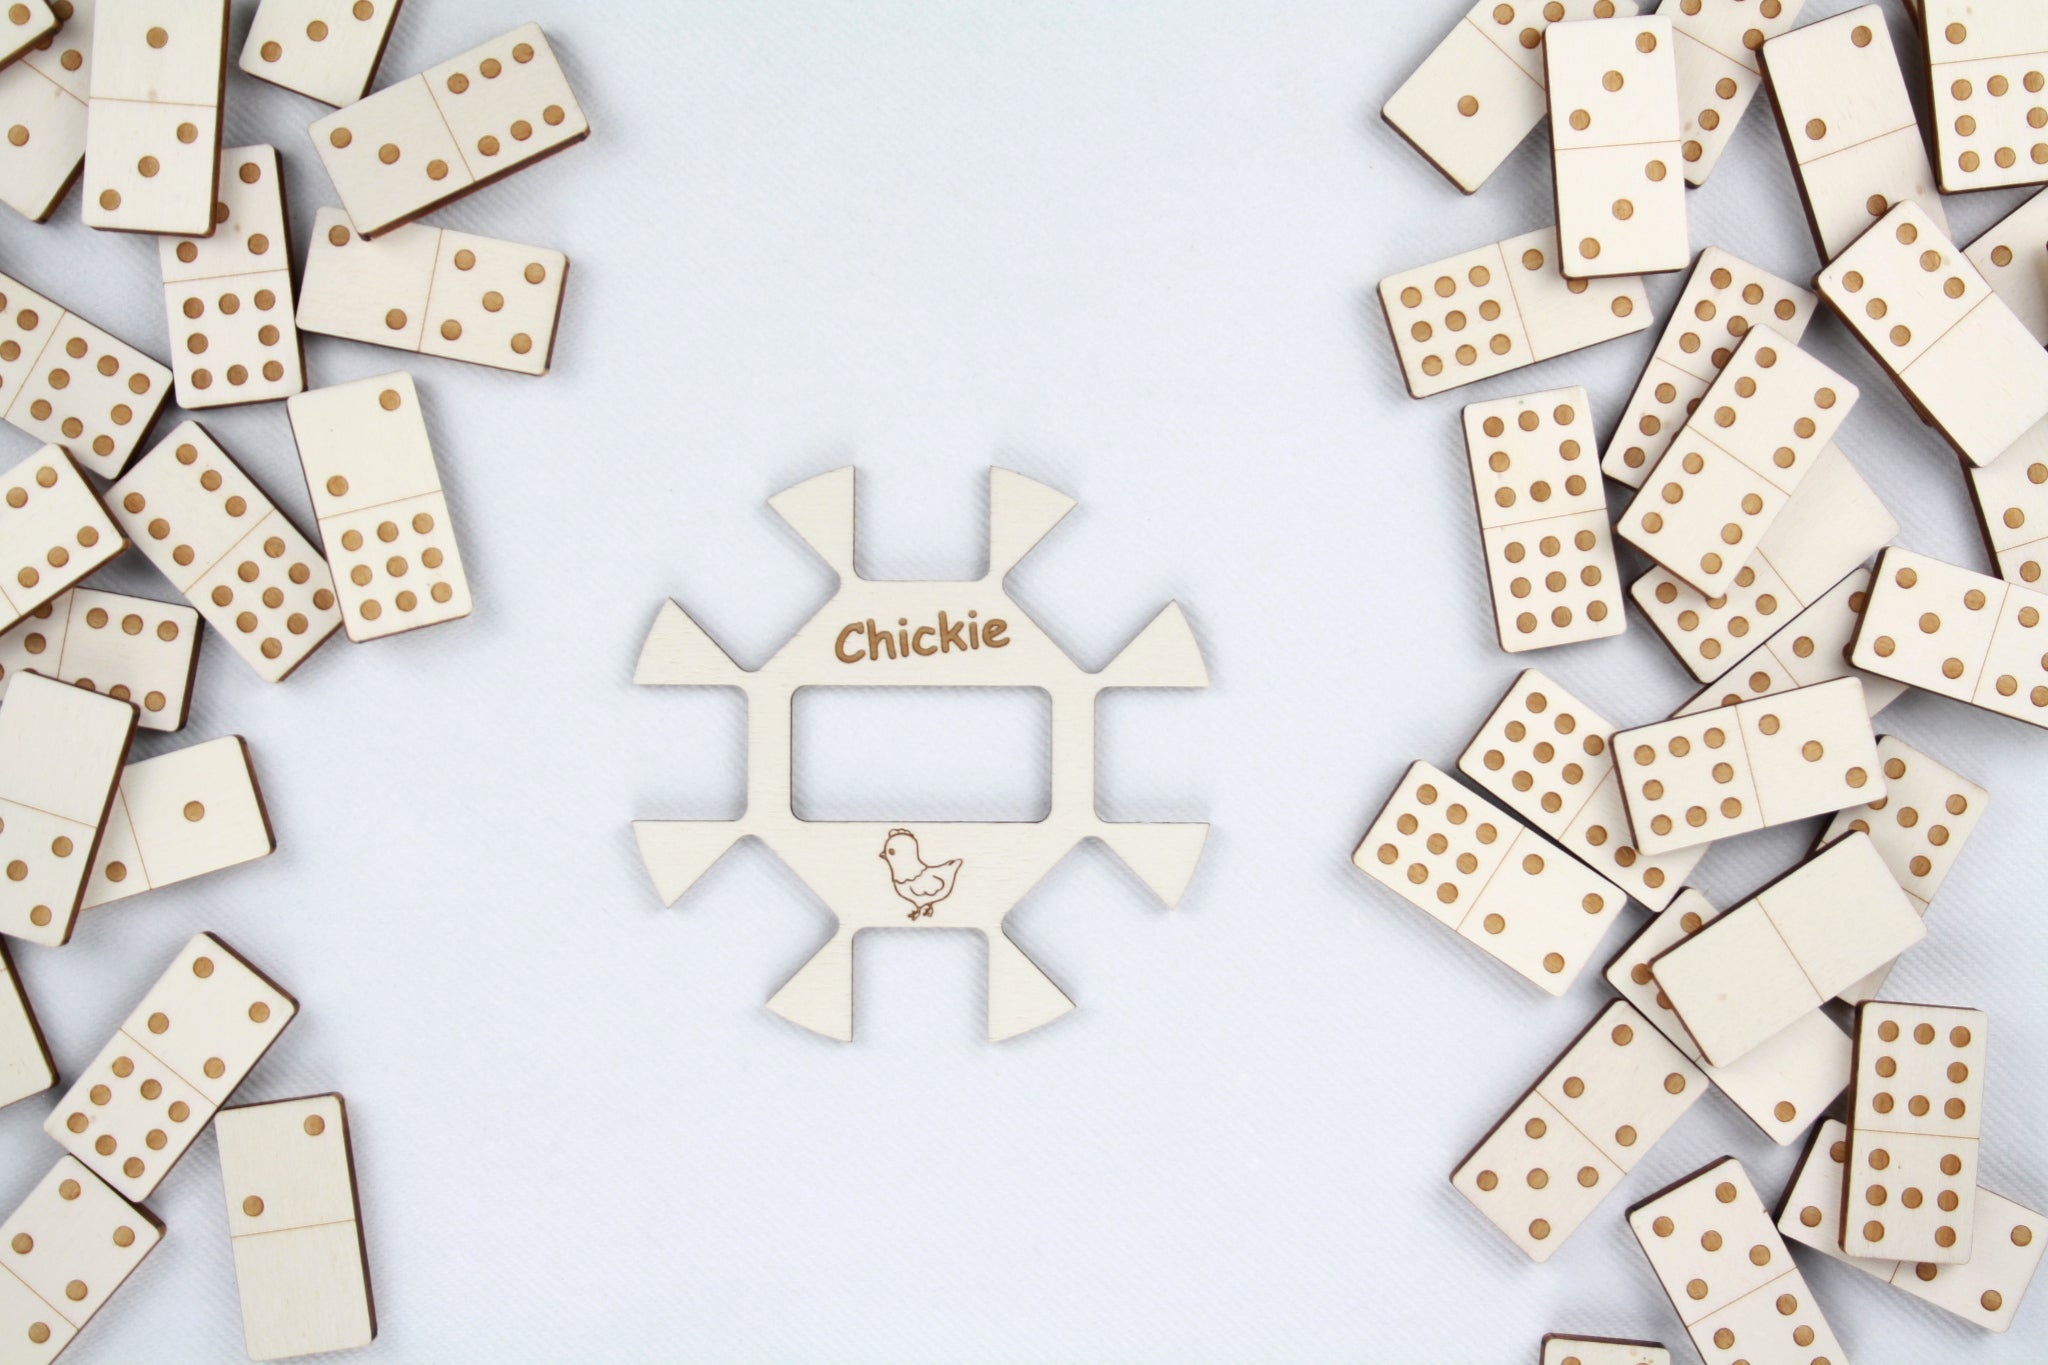 Domino spel variant Chickie. Familie dominospel. Houten bordspelen.